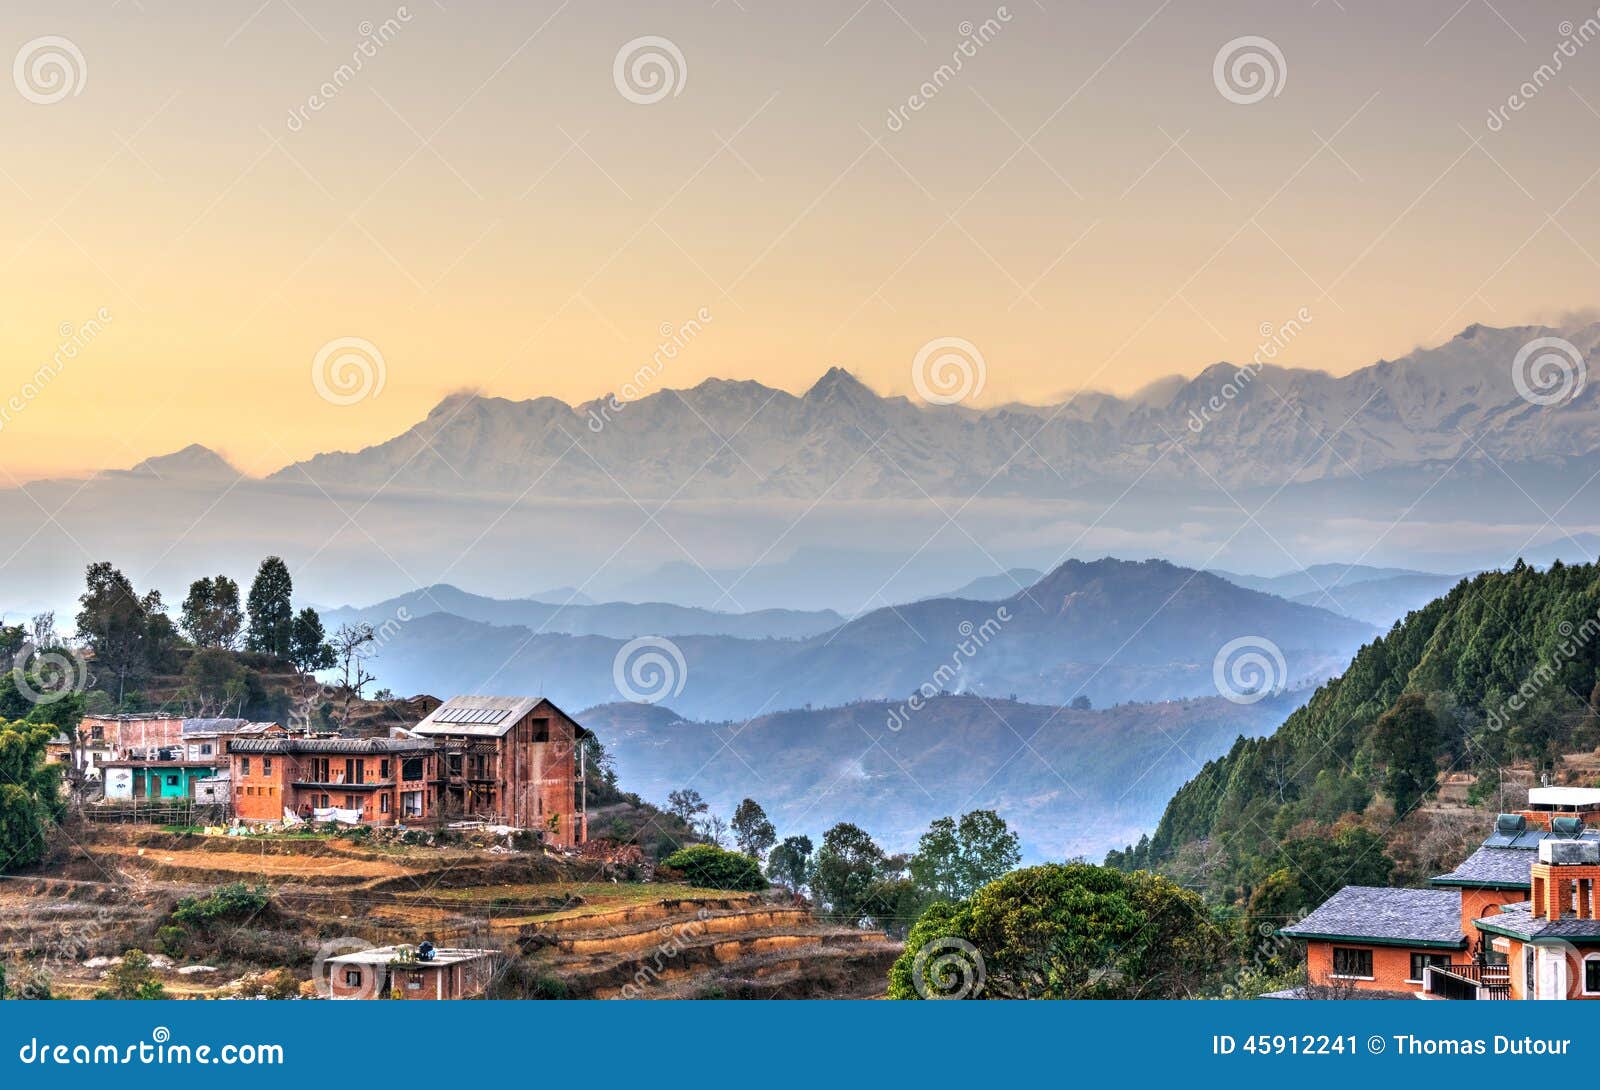 bandipur village in nepal